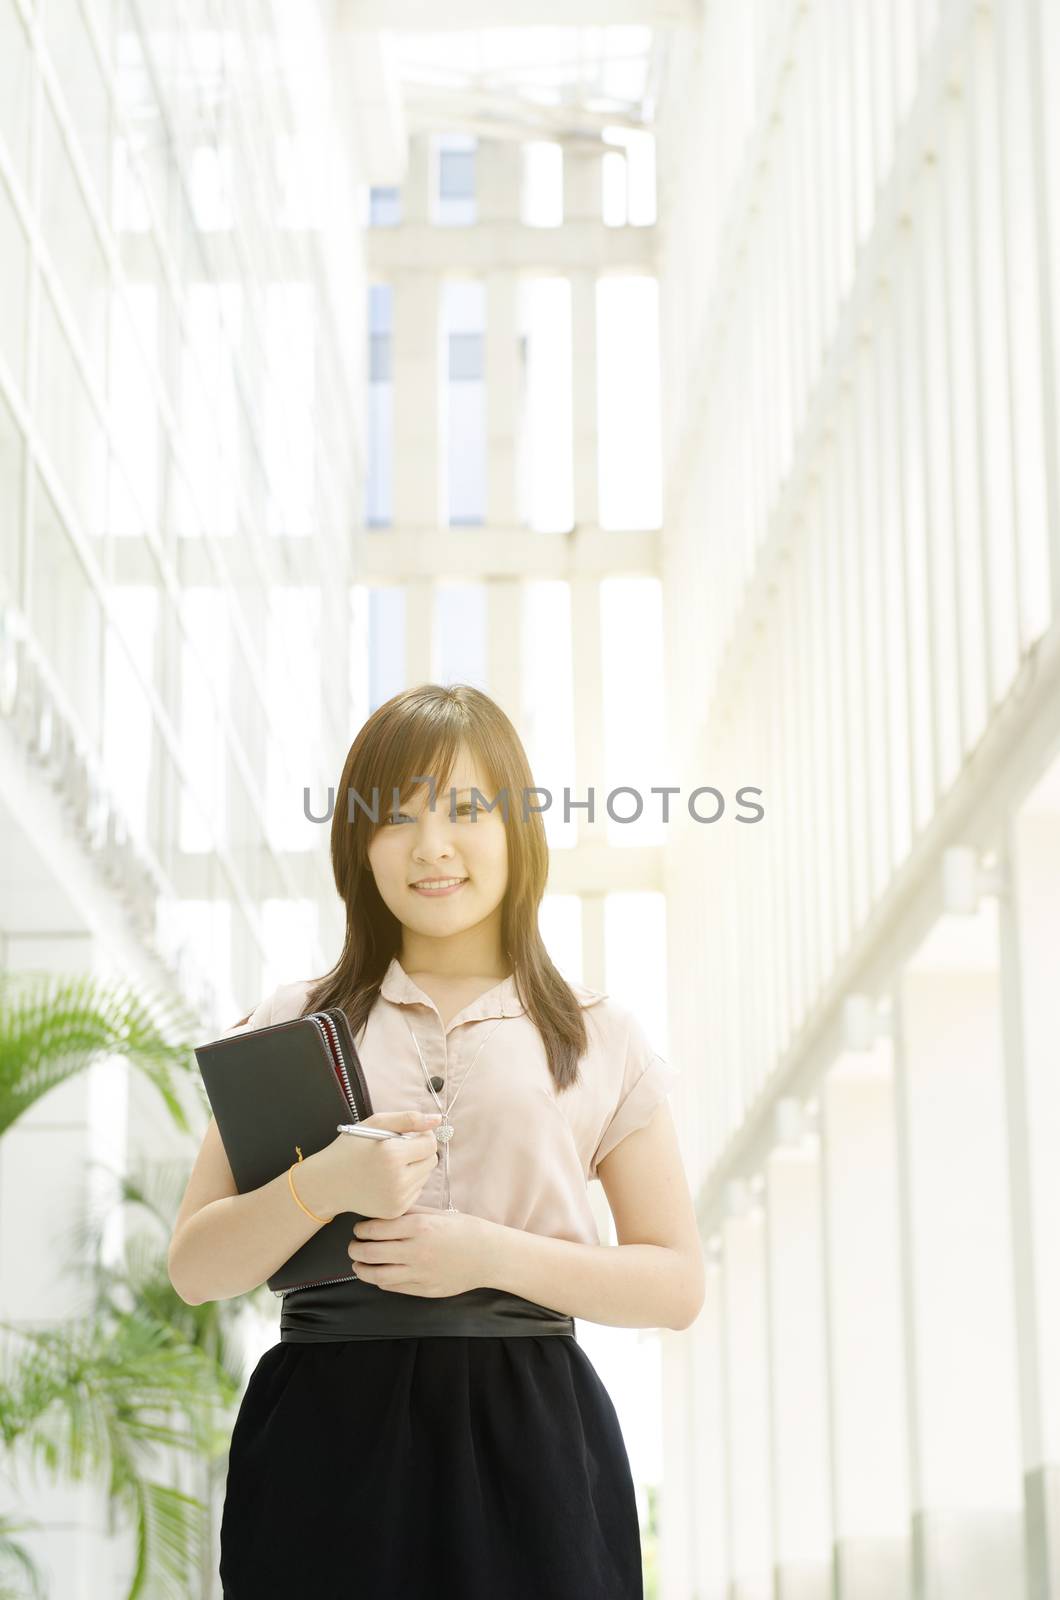 Young Asian woman executive smiling by szefei